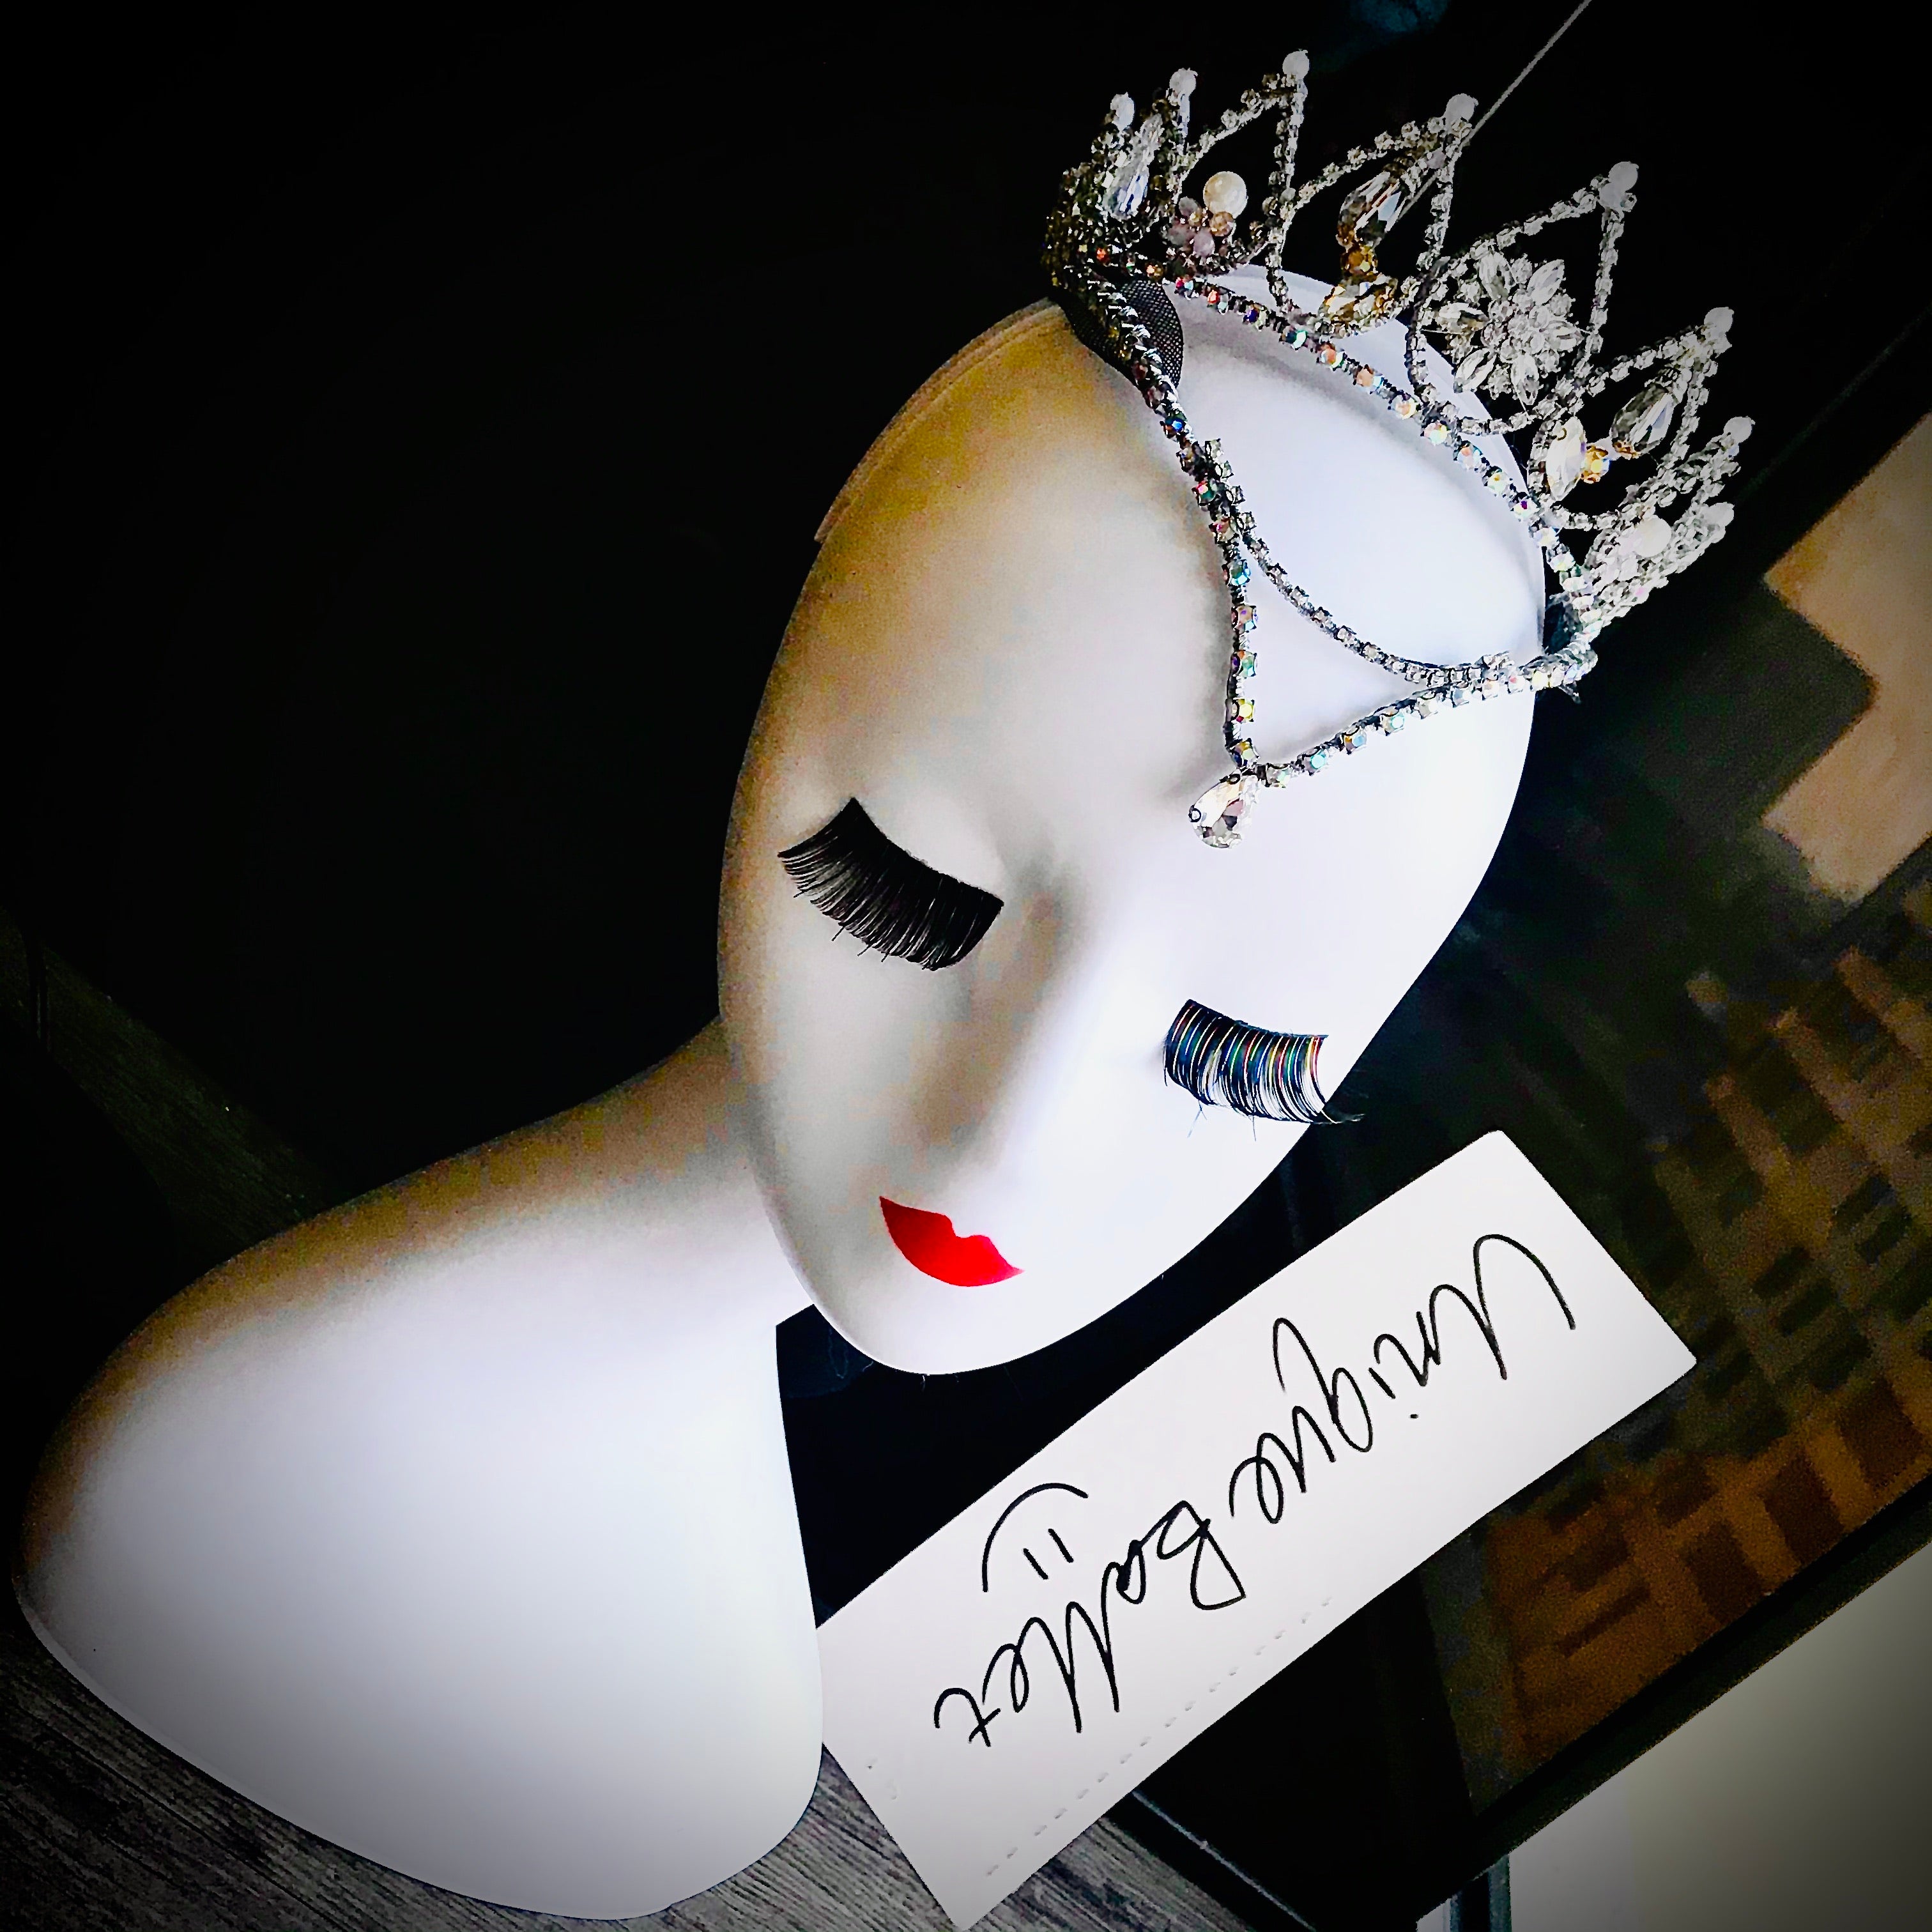 Professional YAGP Handmade Sleeping Beauty Tiara Nutcracker Crystal Aurora Fairy White Swan Crown Headpiece HPZDWHTSWNCRWN